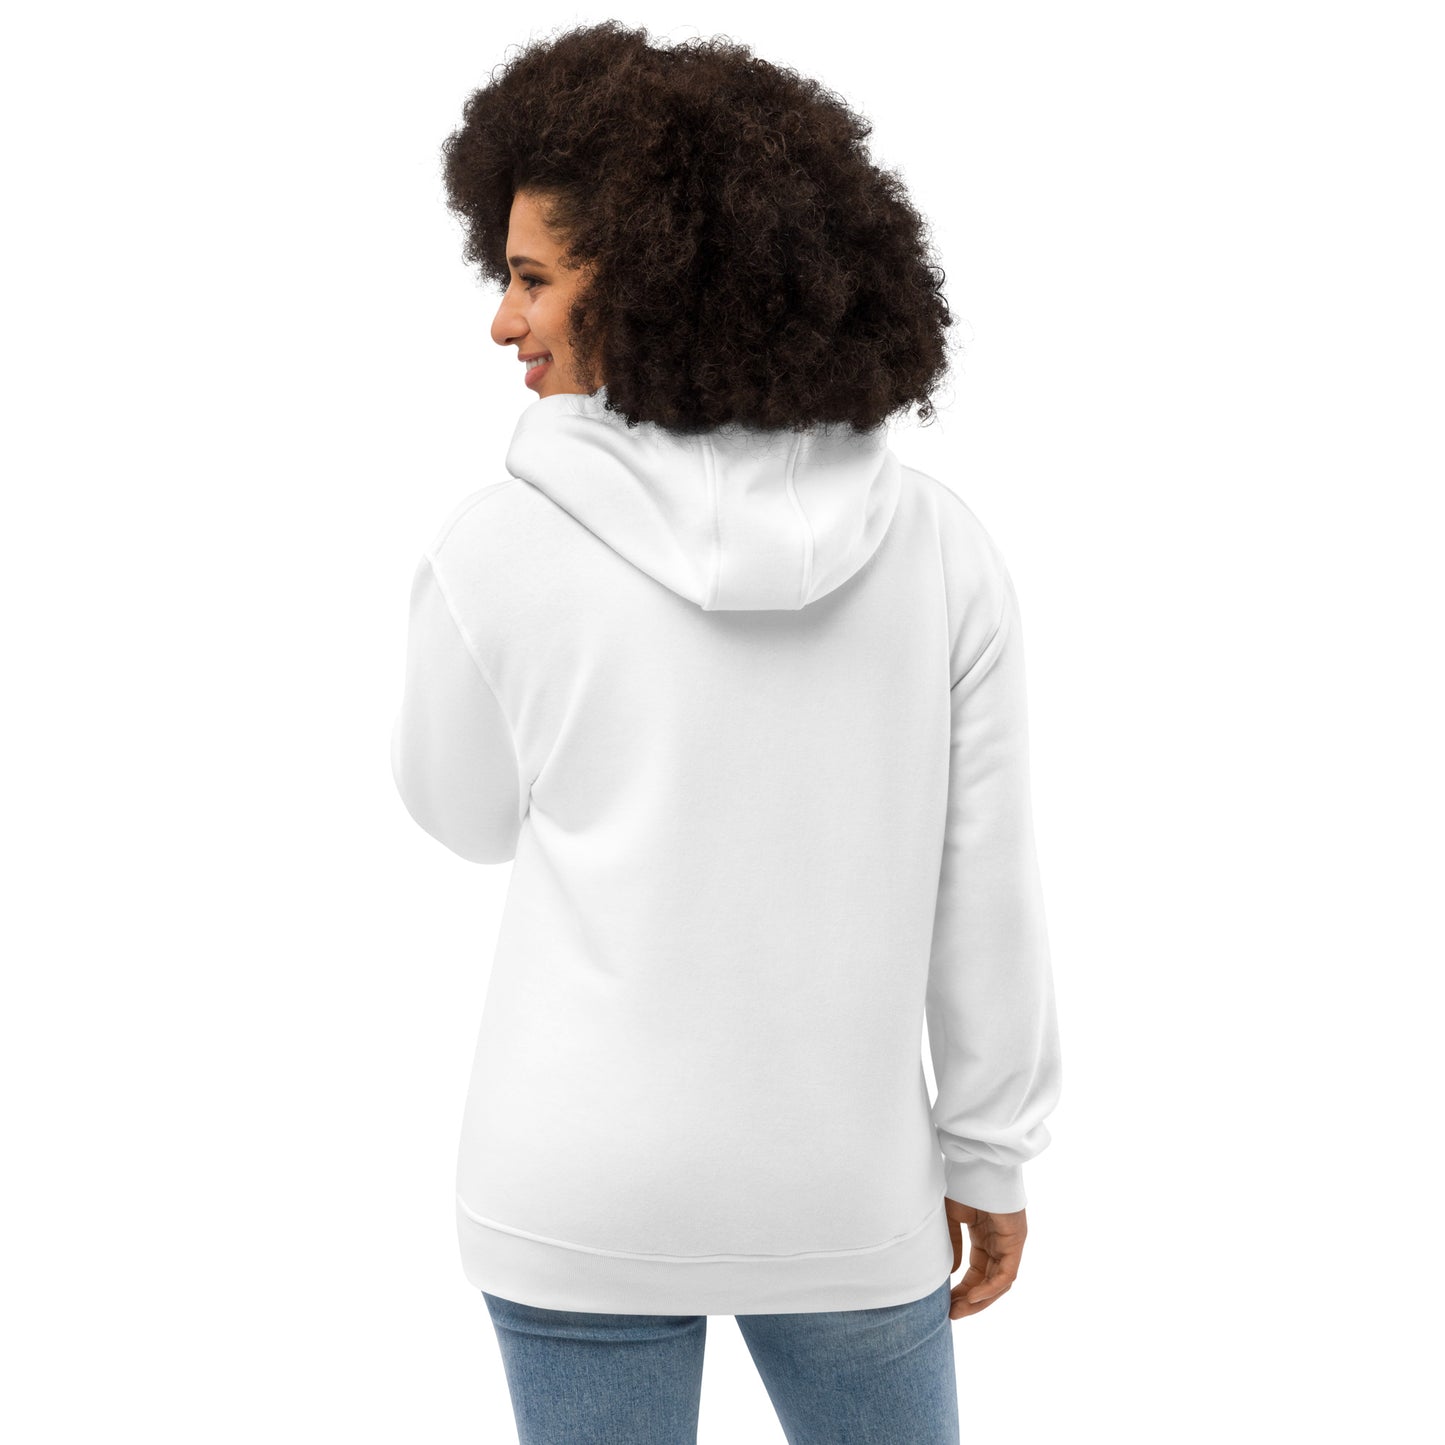 Tengritagh Premium eco hoodie for woman